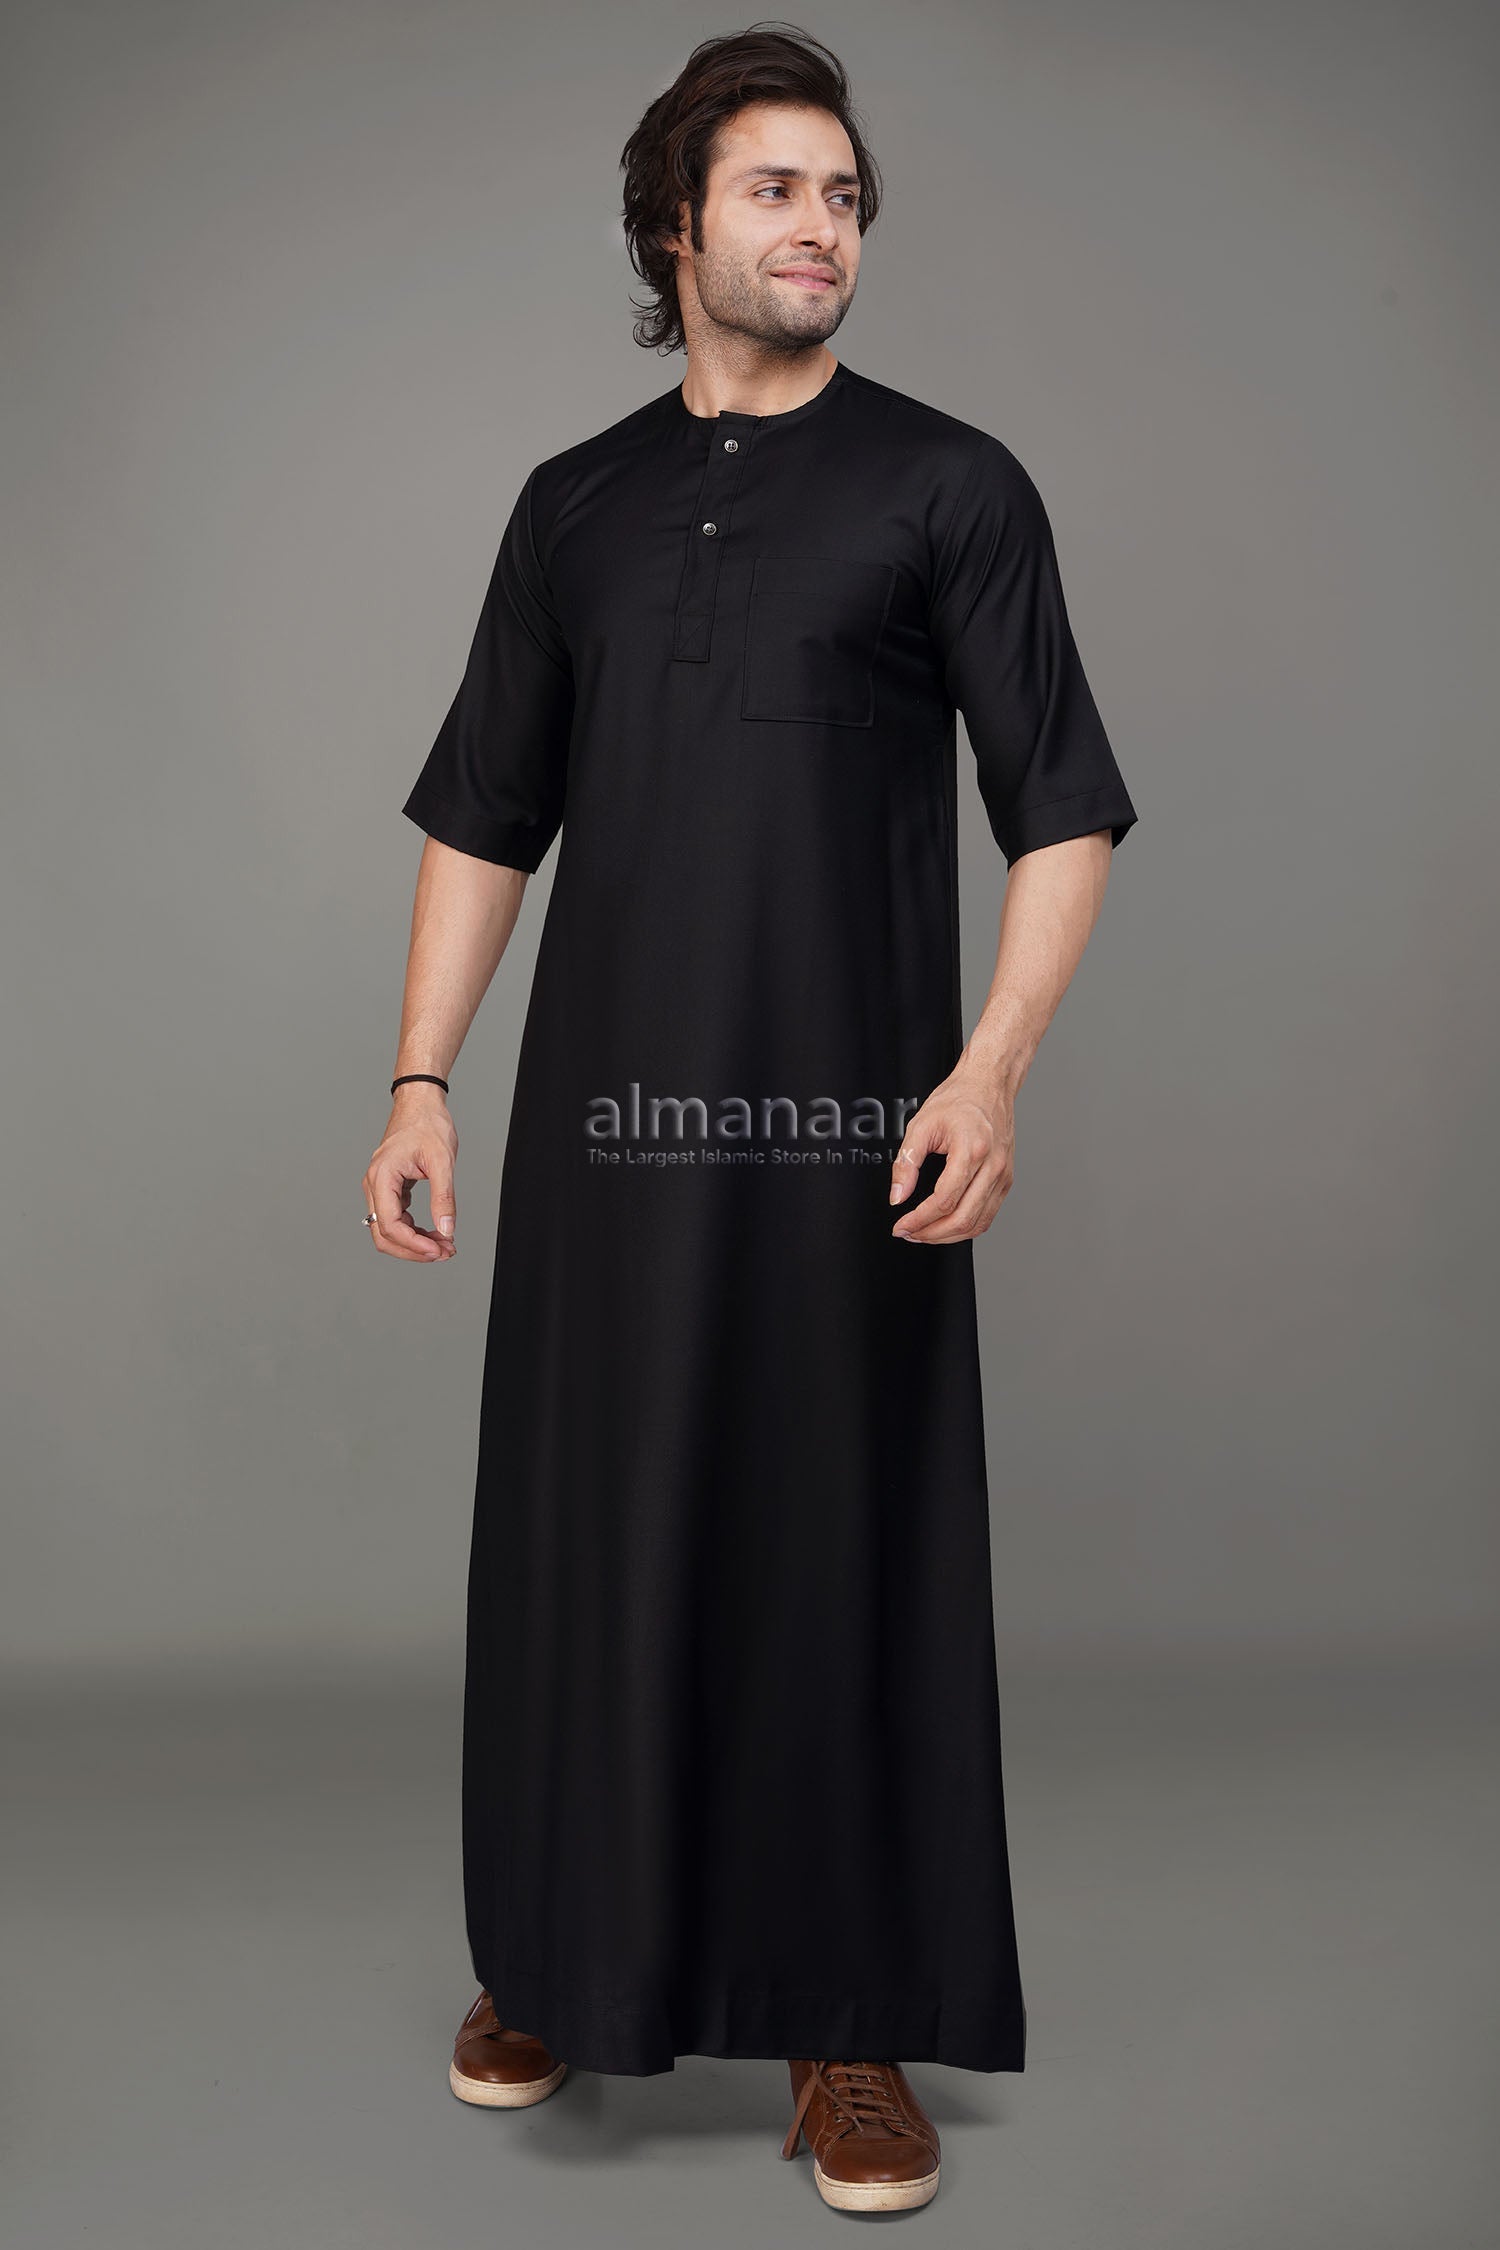 Black Short Sleeve Thobe With Buttons-almanaar Islamic Store